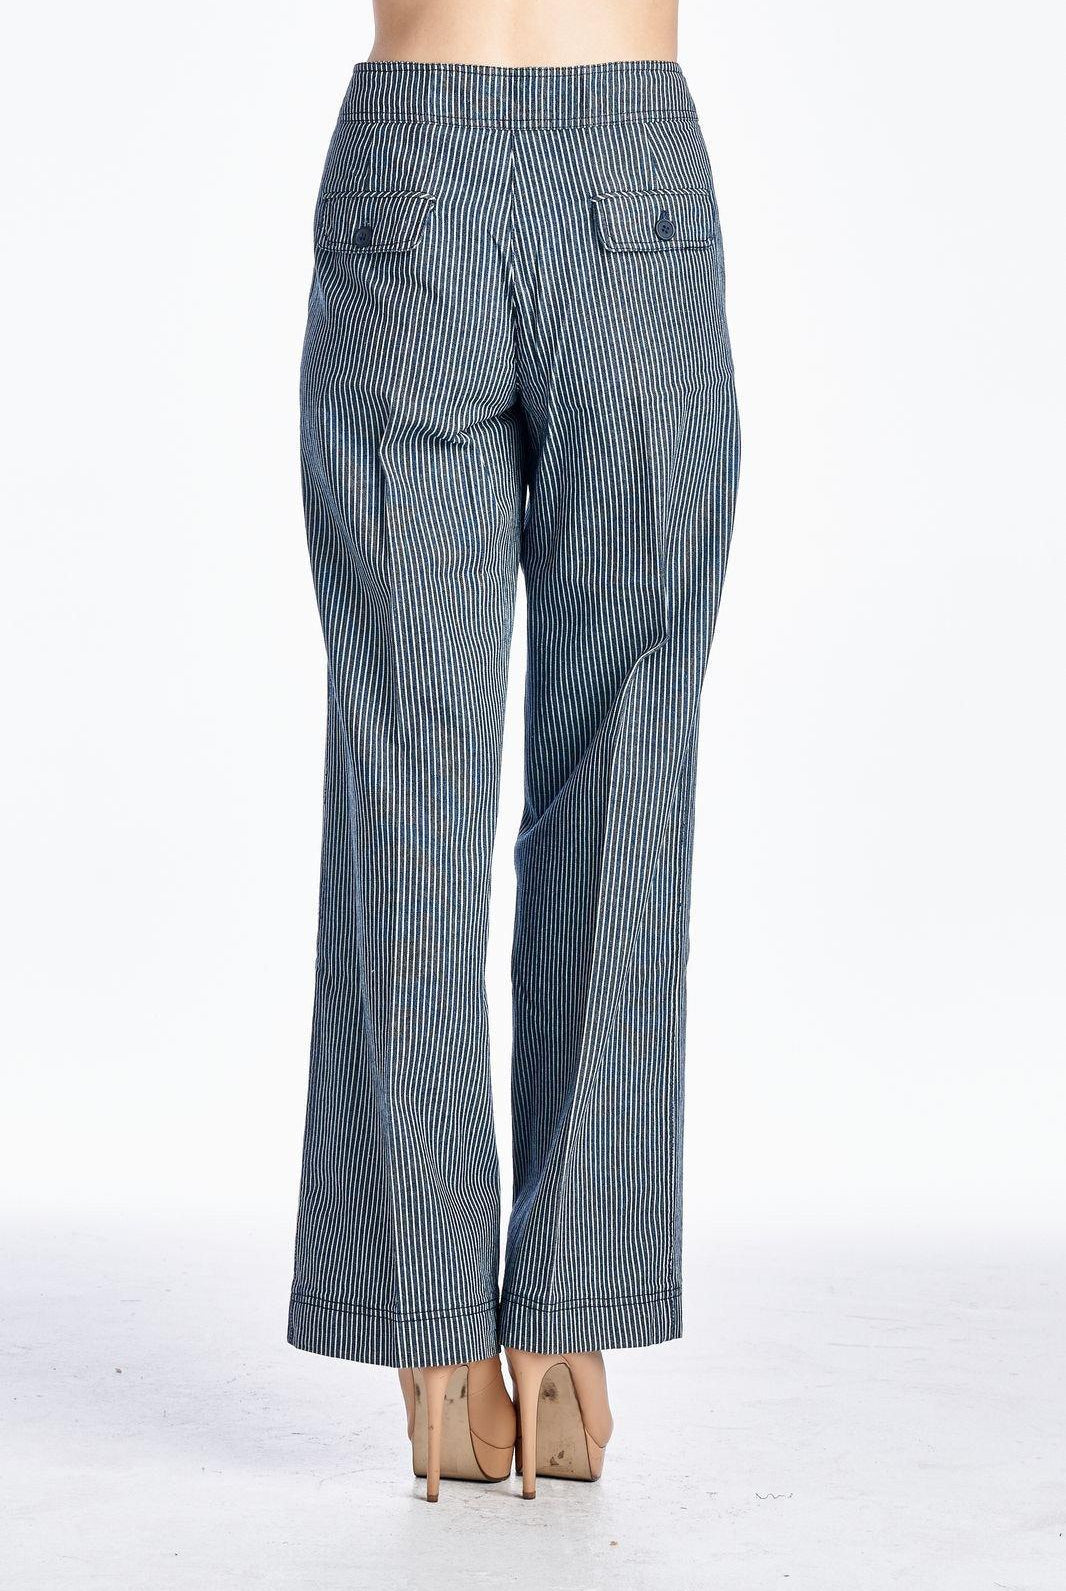 Women's Pants Navy Blue Larry Levine Pinstripe Pants